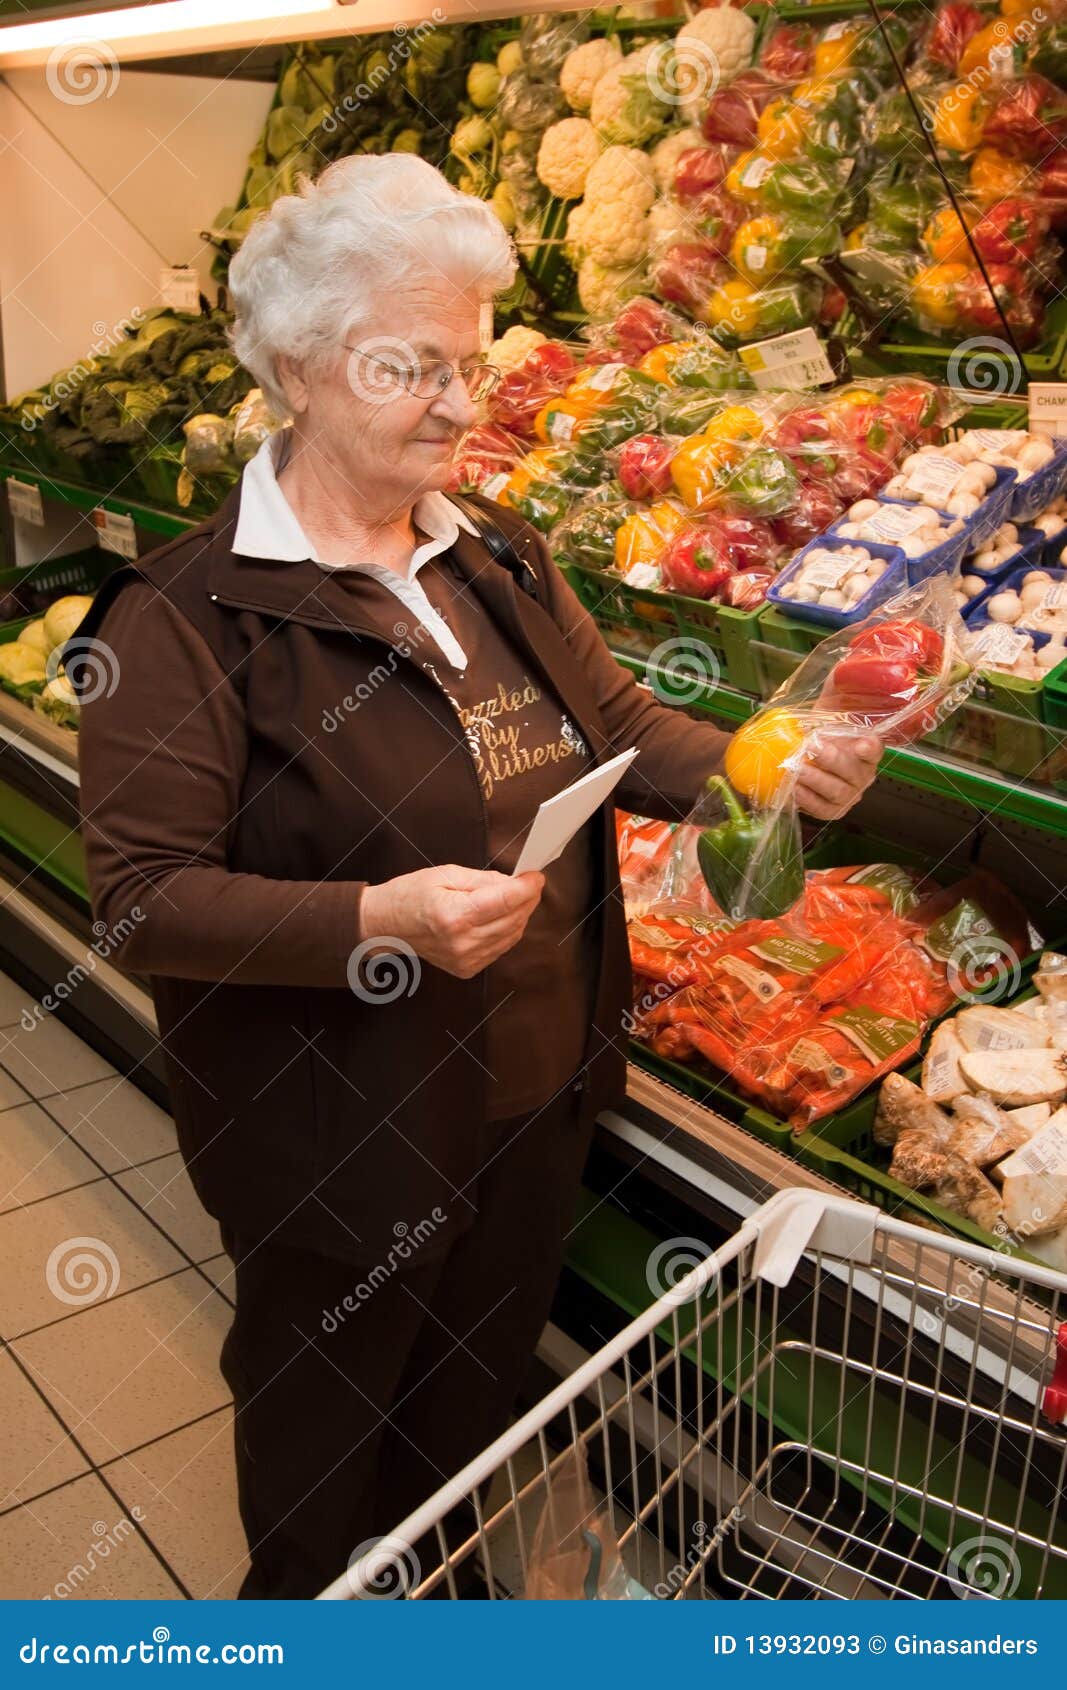 senior citizen when shopping for food